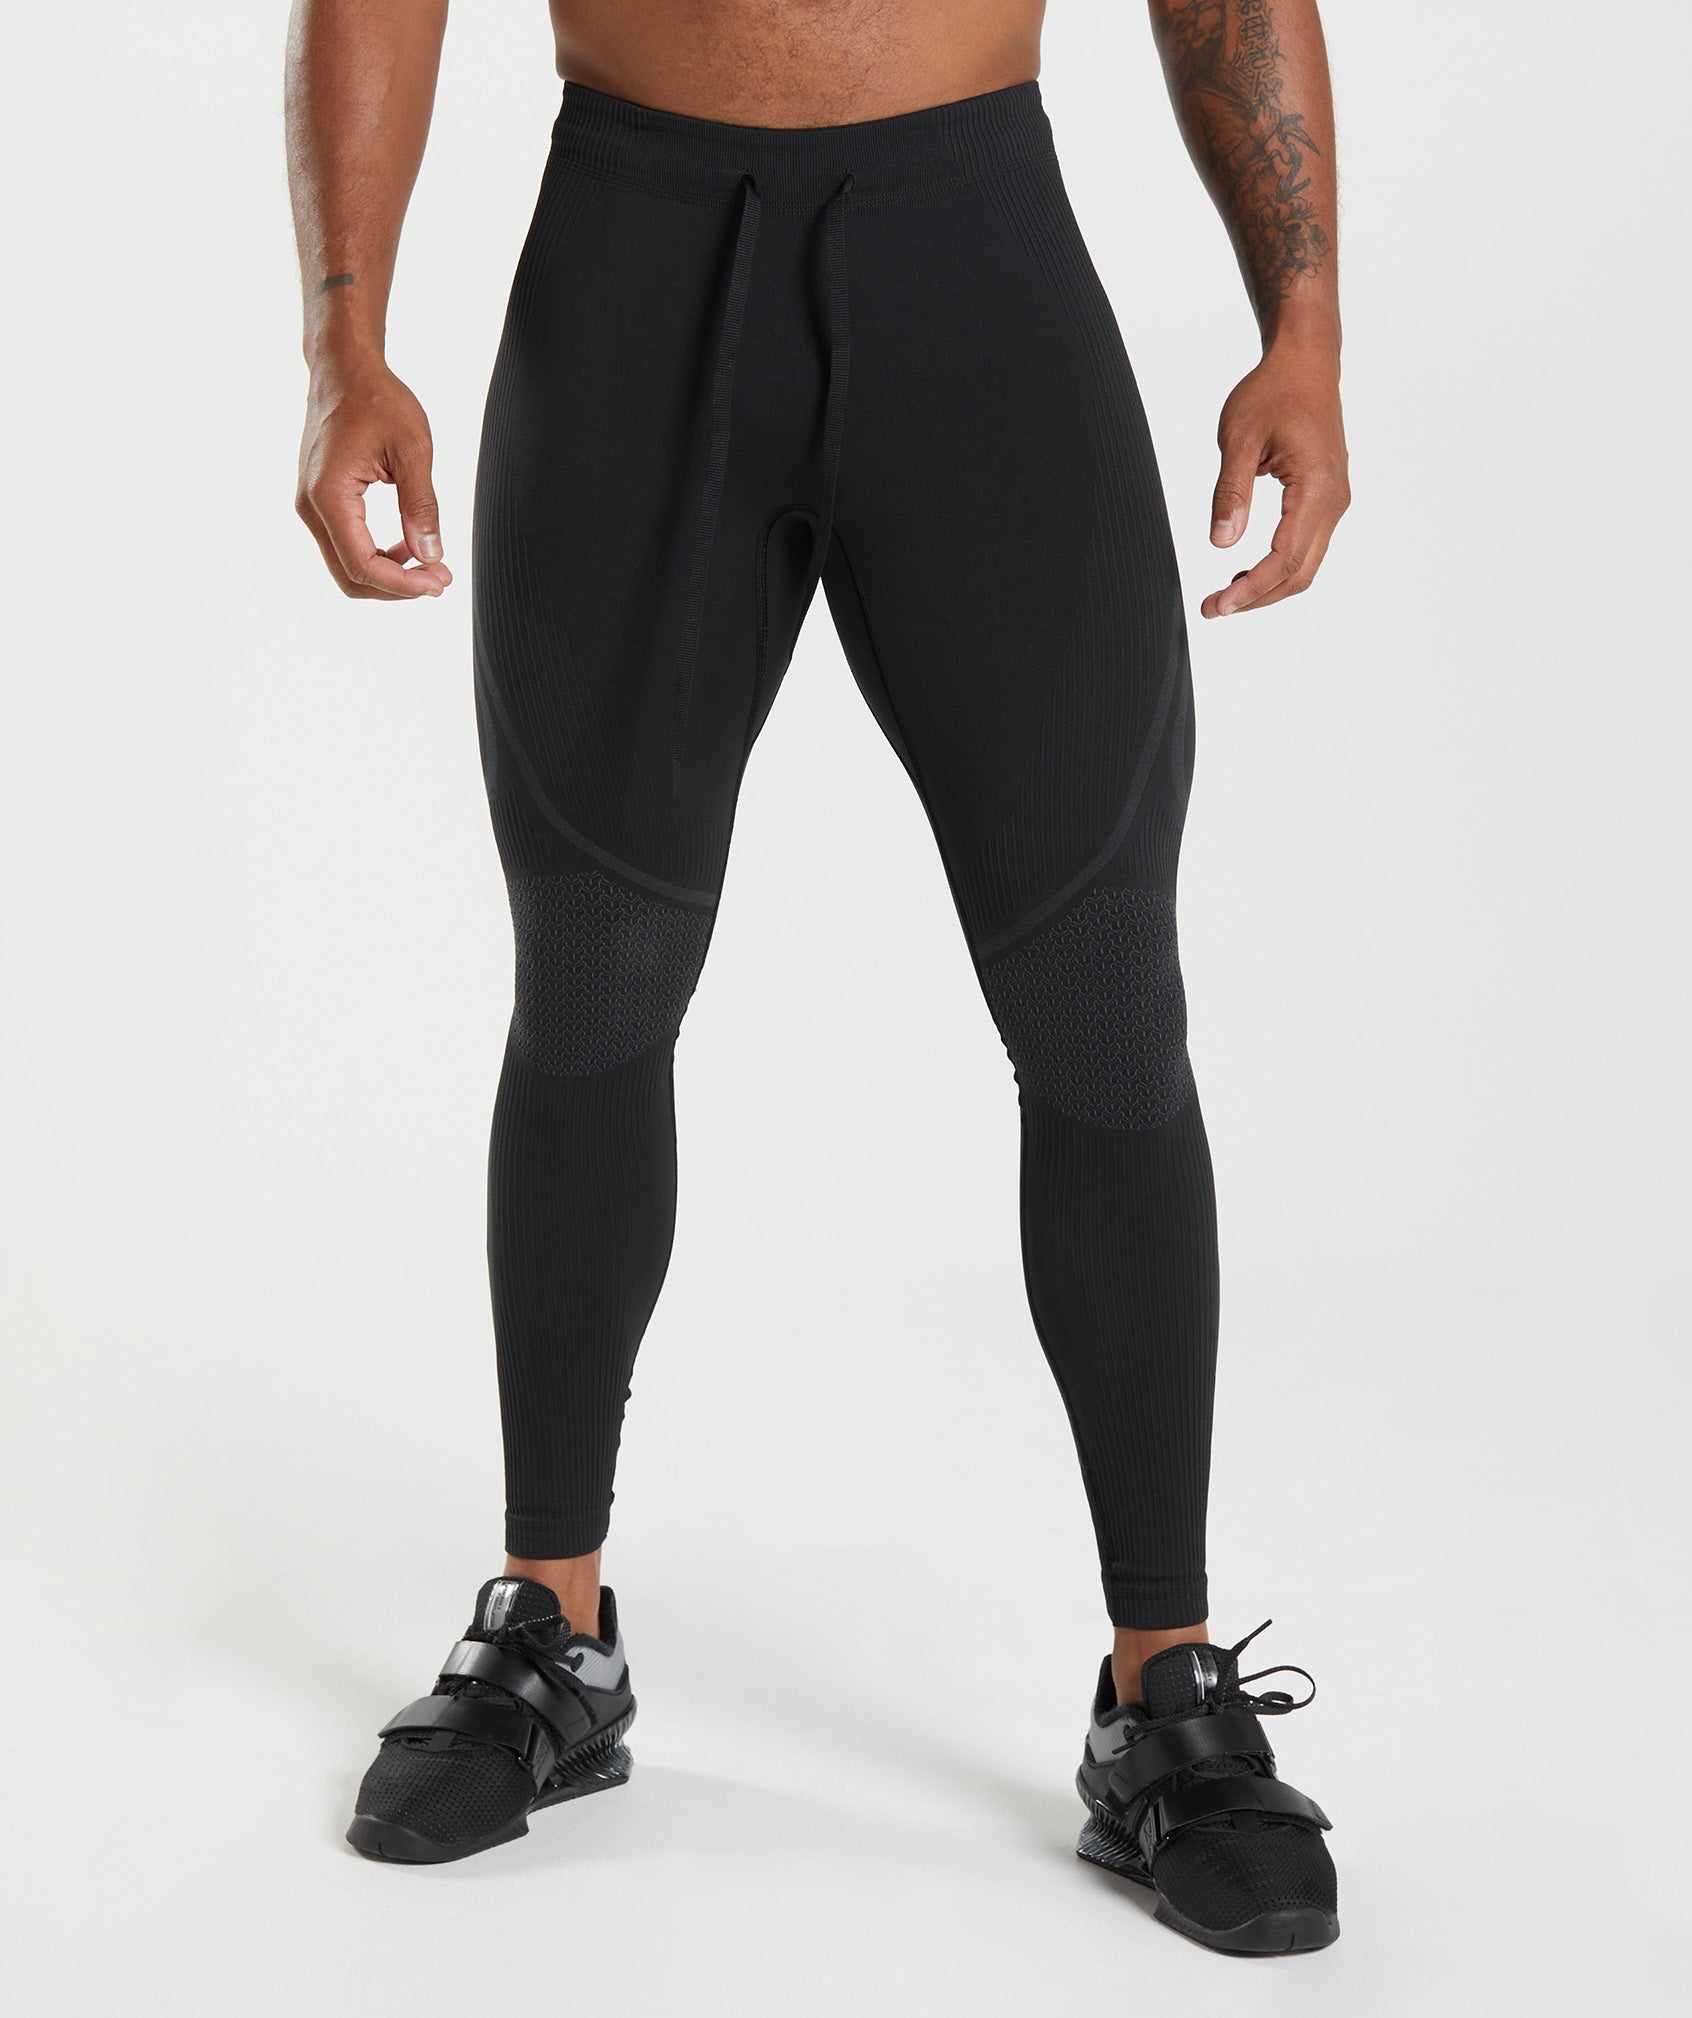 Mens On Running black Performance Workout Leggings